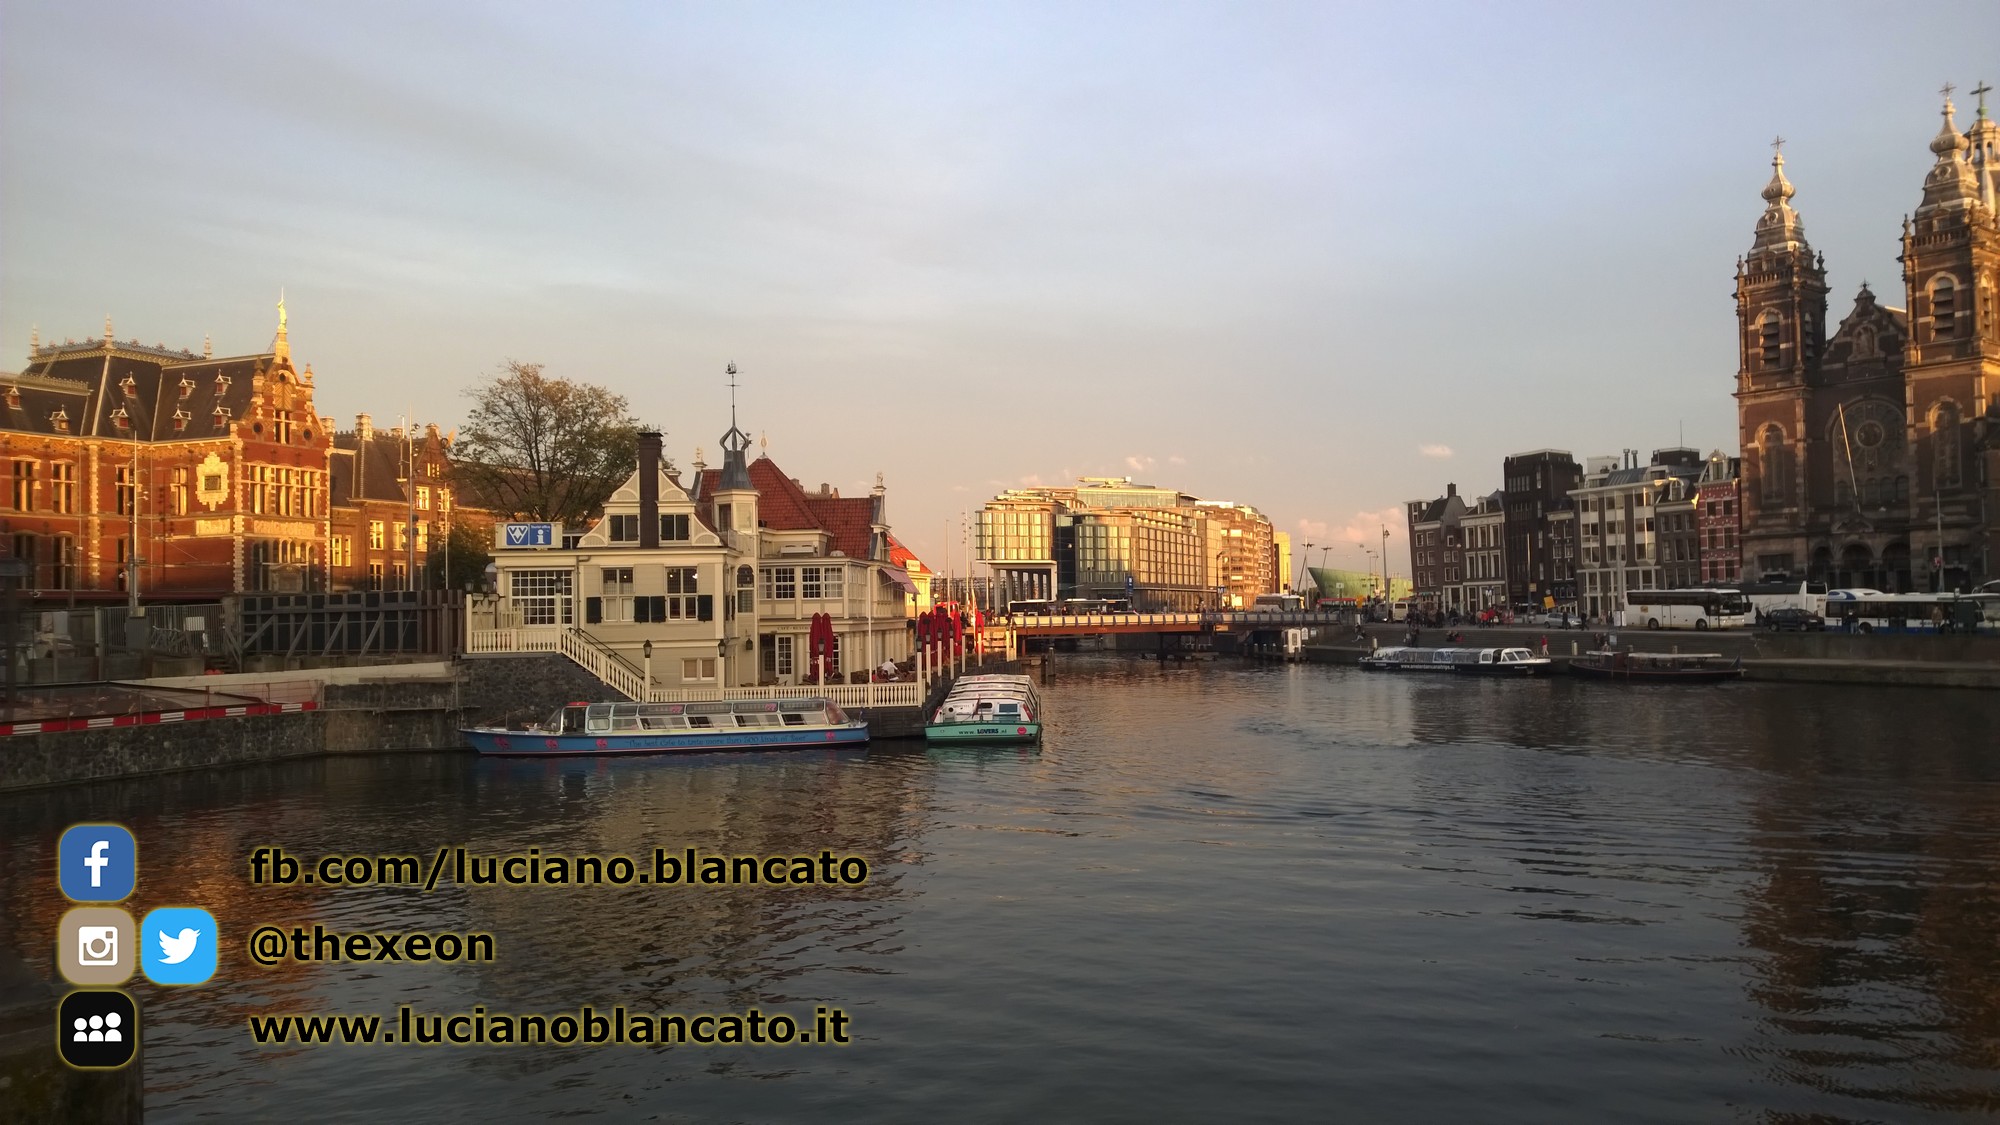 Amsterdam - Basilica di San Nicola - Sint-Nicolaaskerk e canali